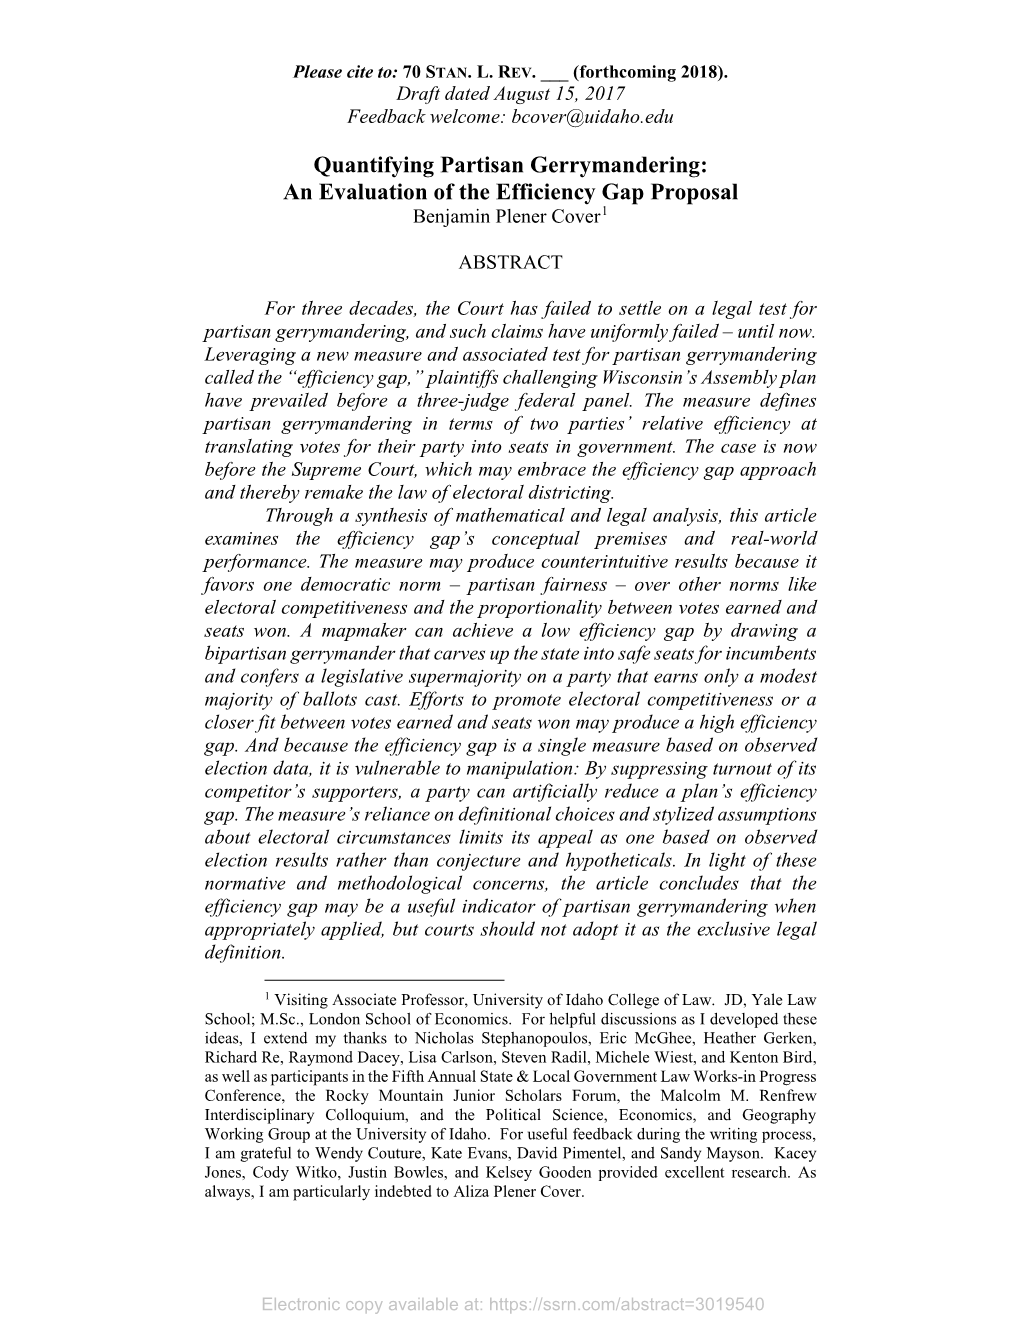 Quantifying Partisan Gerrymandering: an Evaluation of the Efficiency Gap Proposal Benjamin Plener Cover1